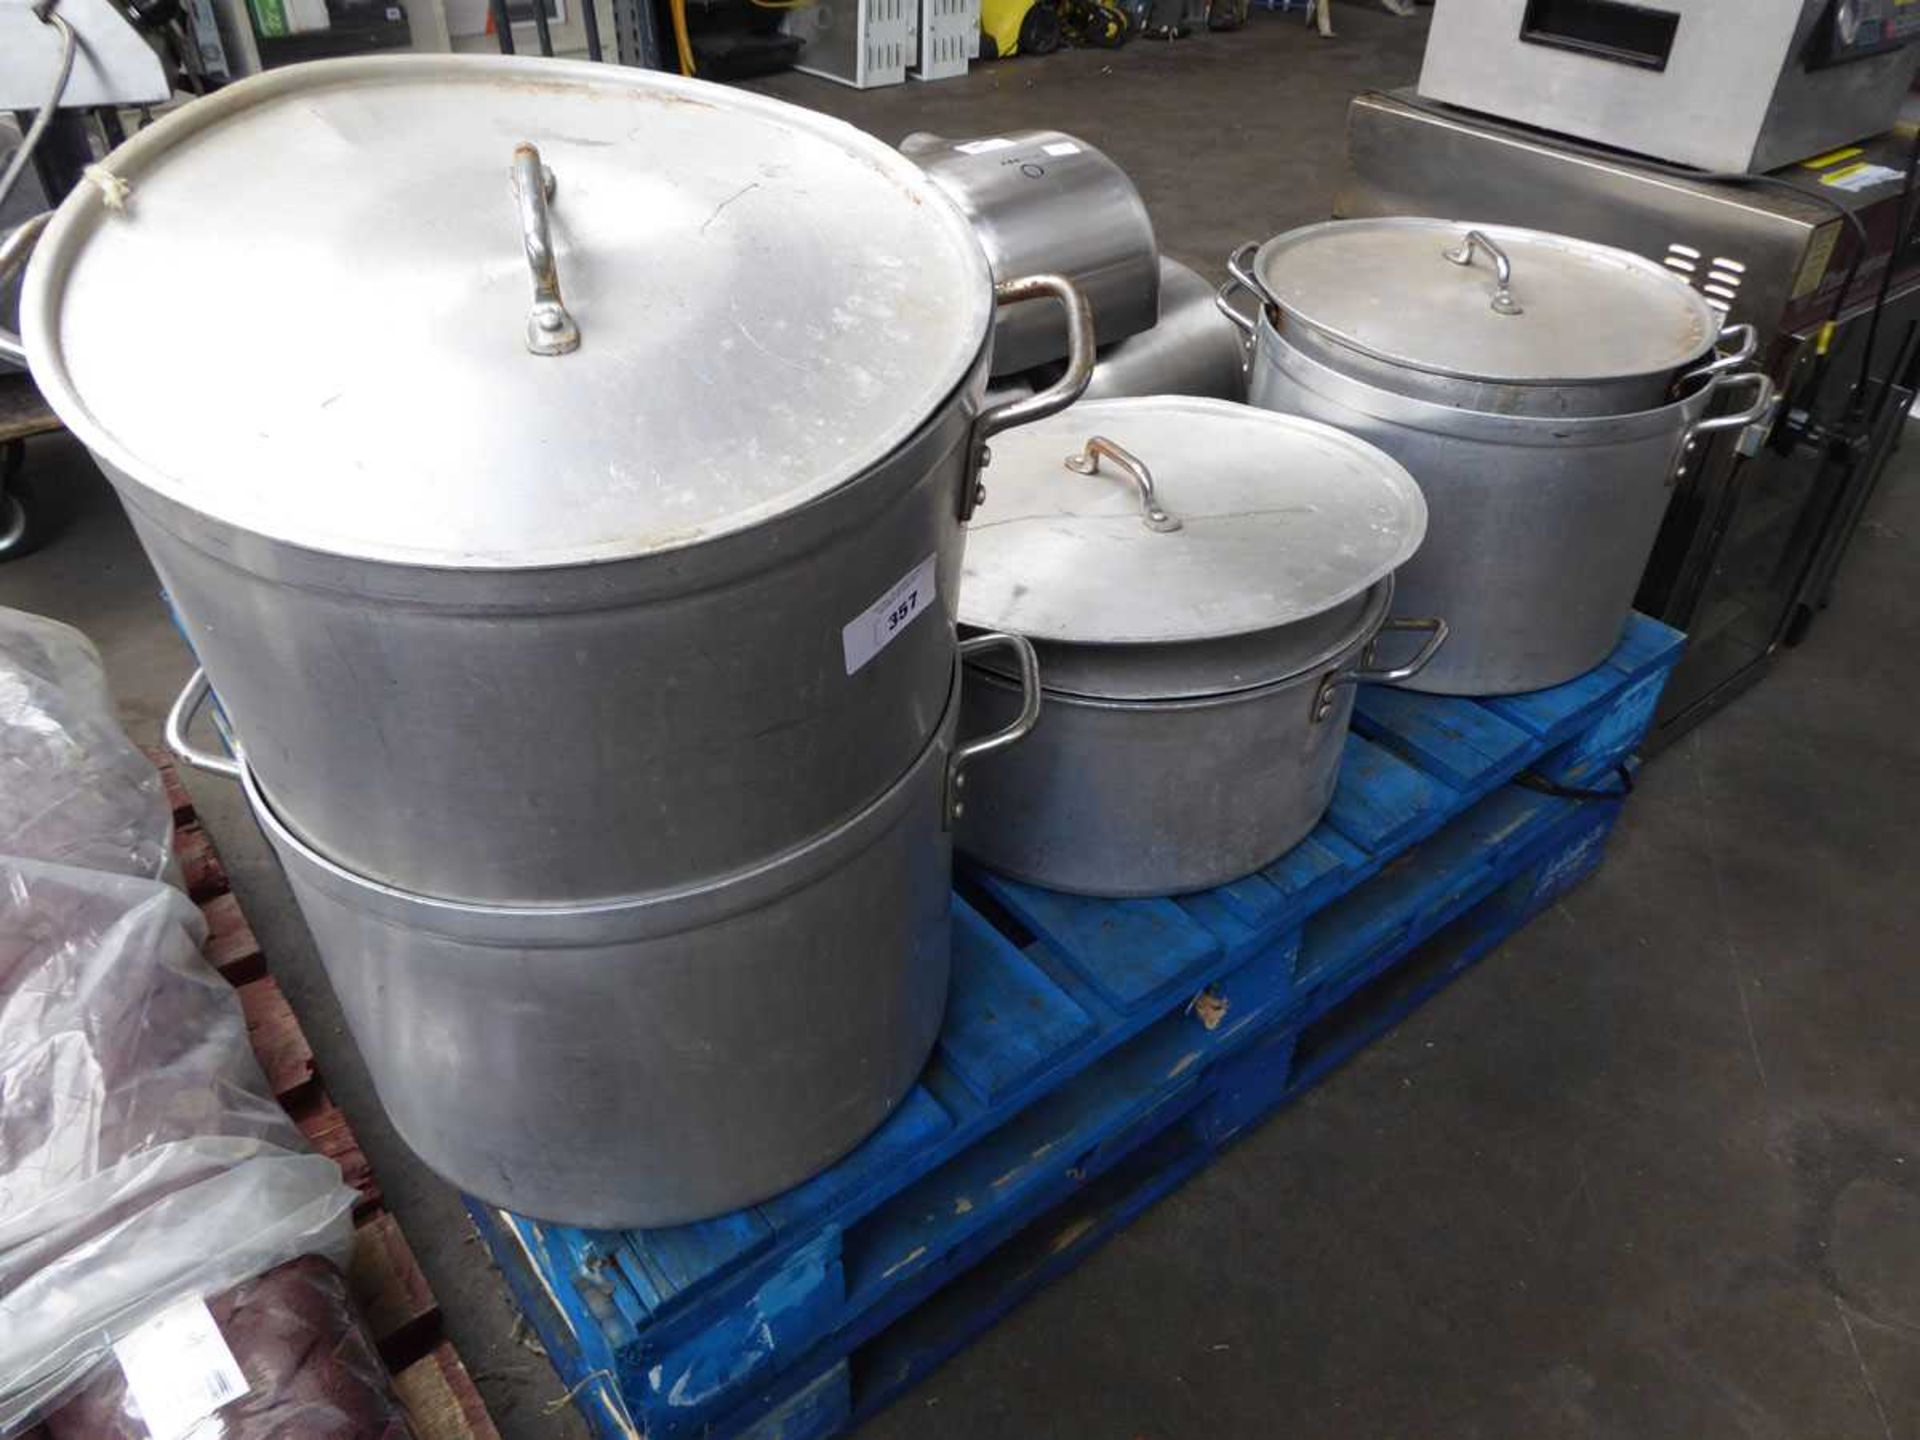 5 large aluminium heavy duty saucepans, some with lids